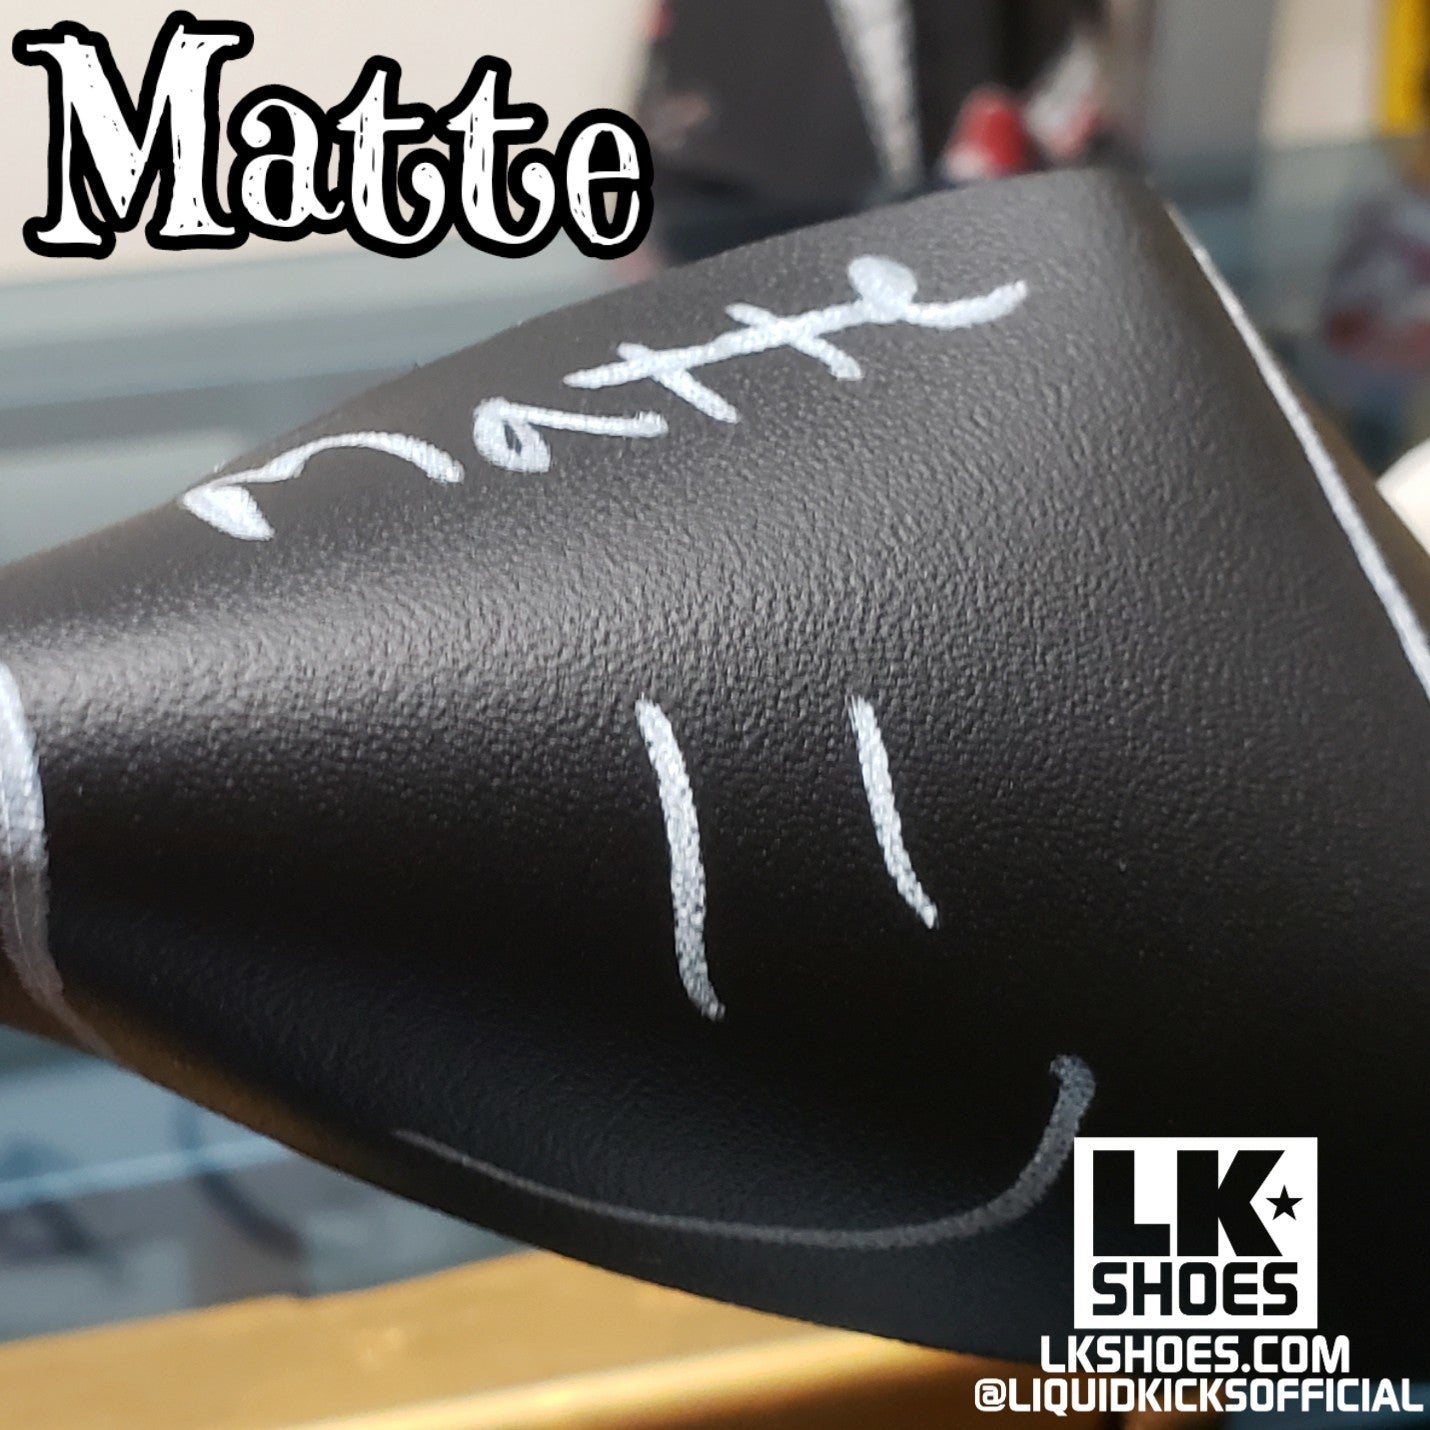 Matt Leather sealer top coat polyurethane scuff & scratch resistant finish.